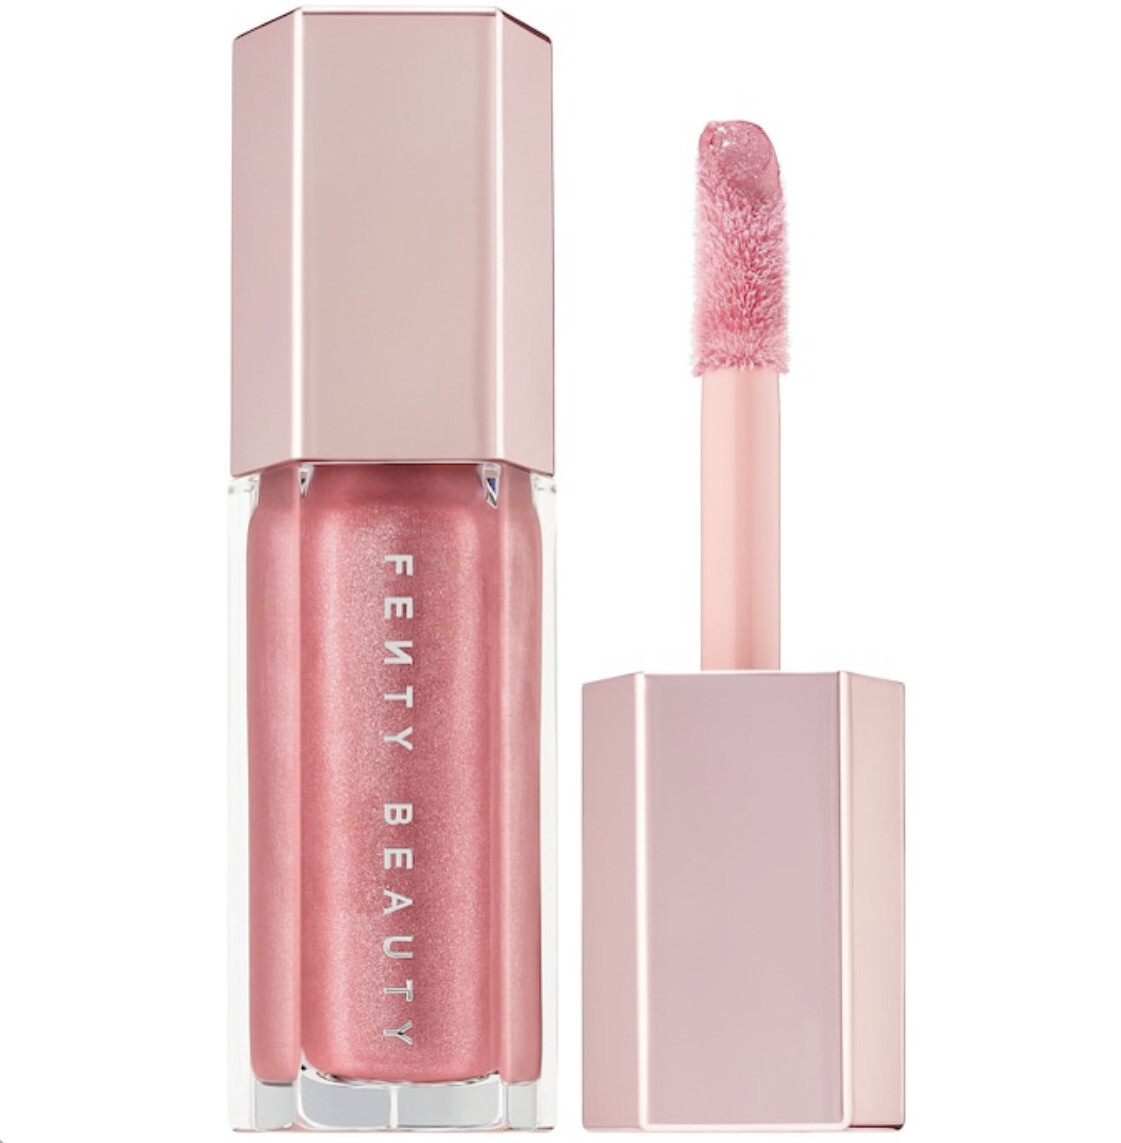 Fenty Beauty - Gloss Bomb Universal Lip Luminizer | FU$$Y - shimmering pink